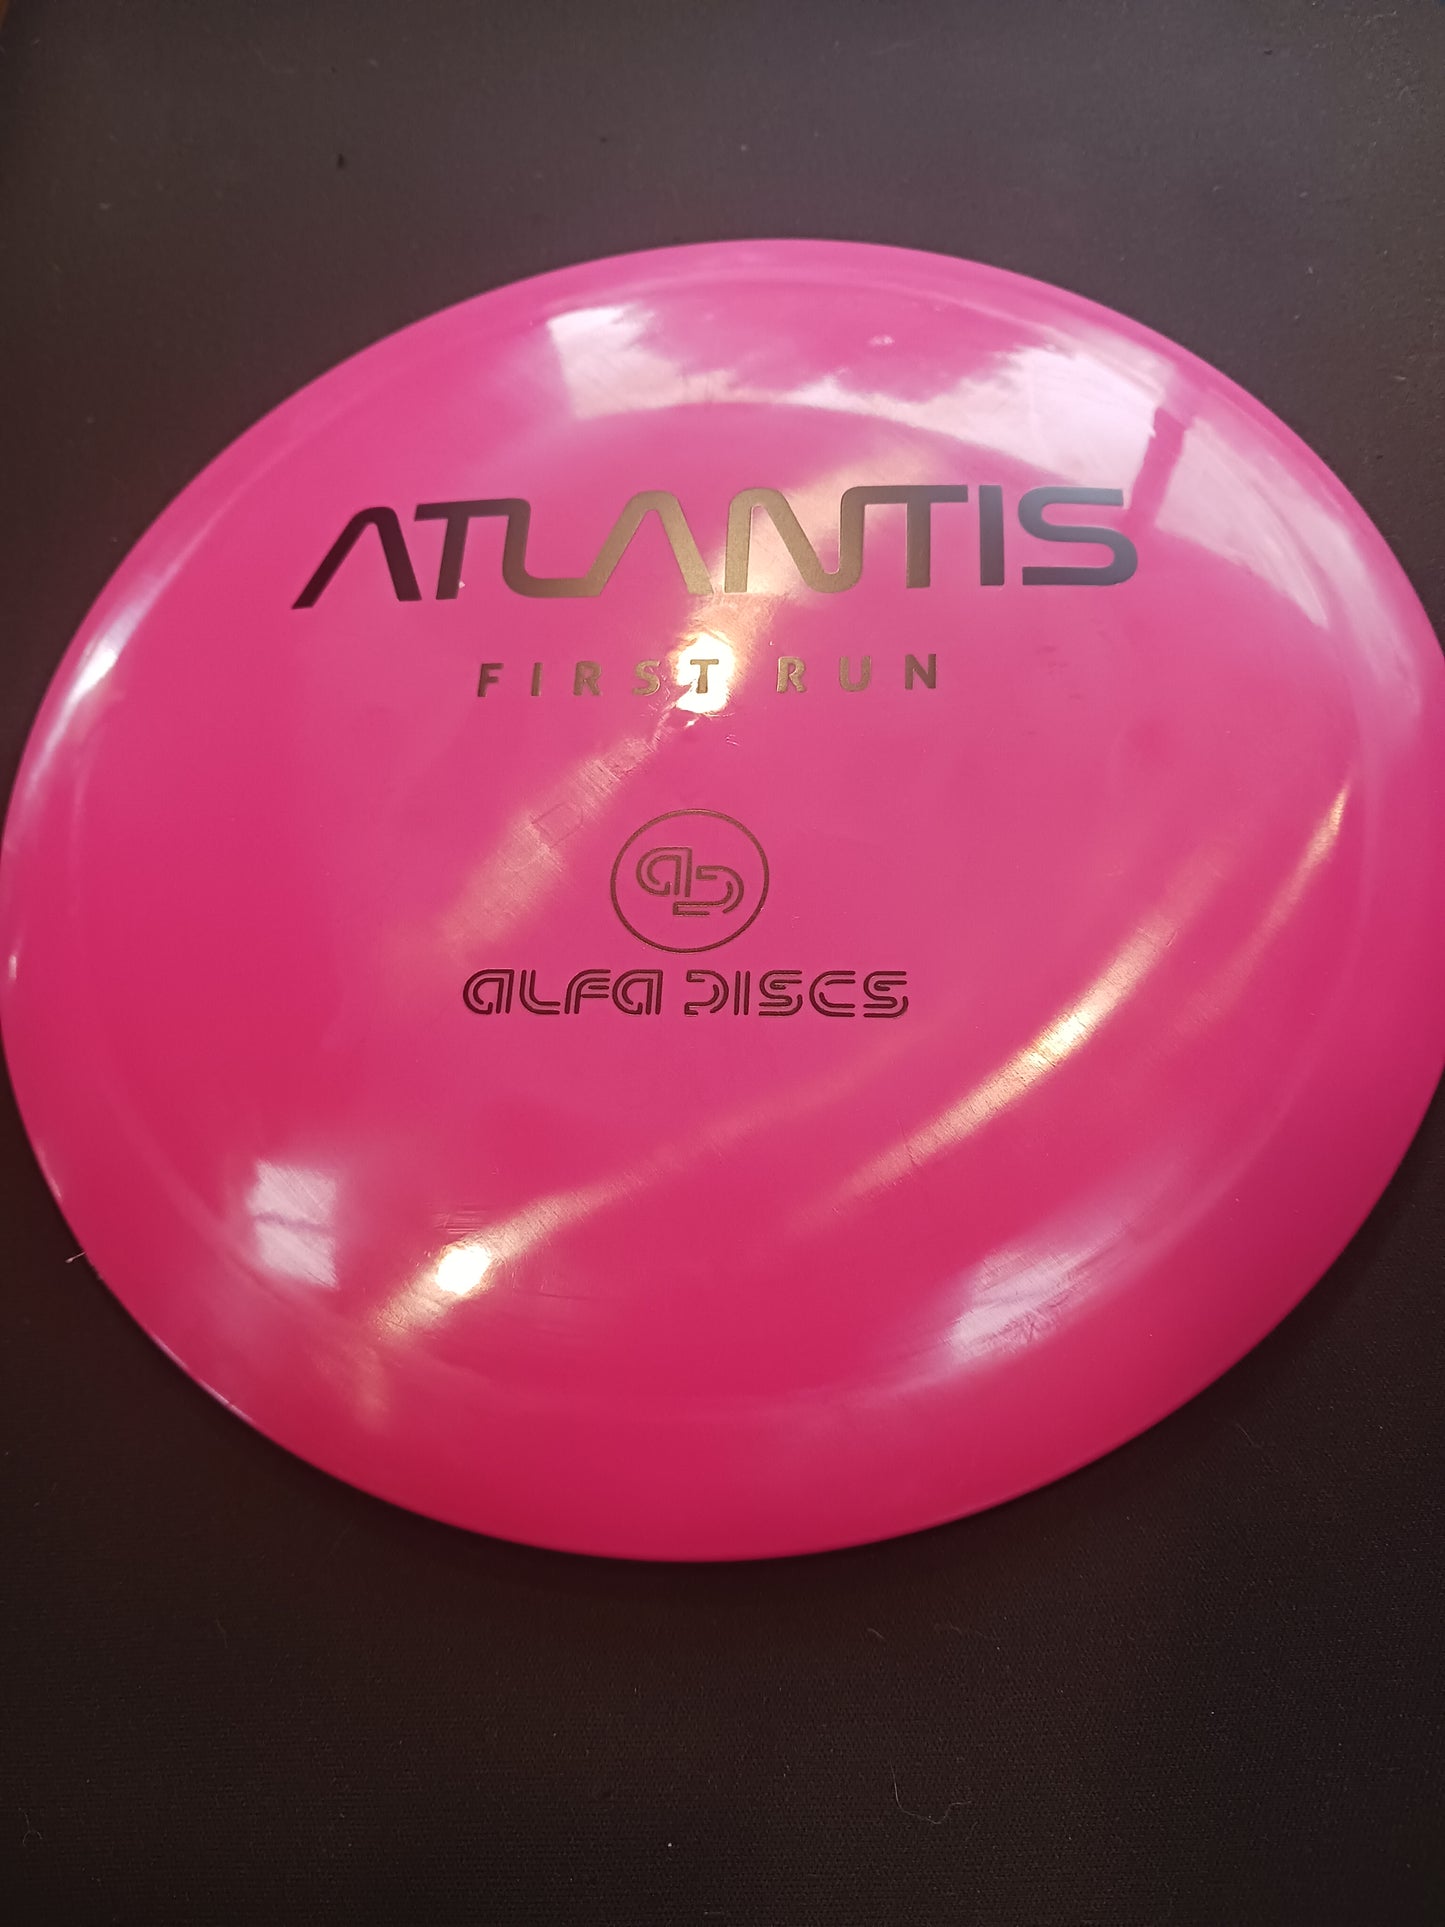 Alfa Discs Atlantis